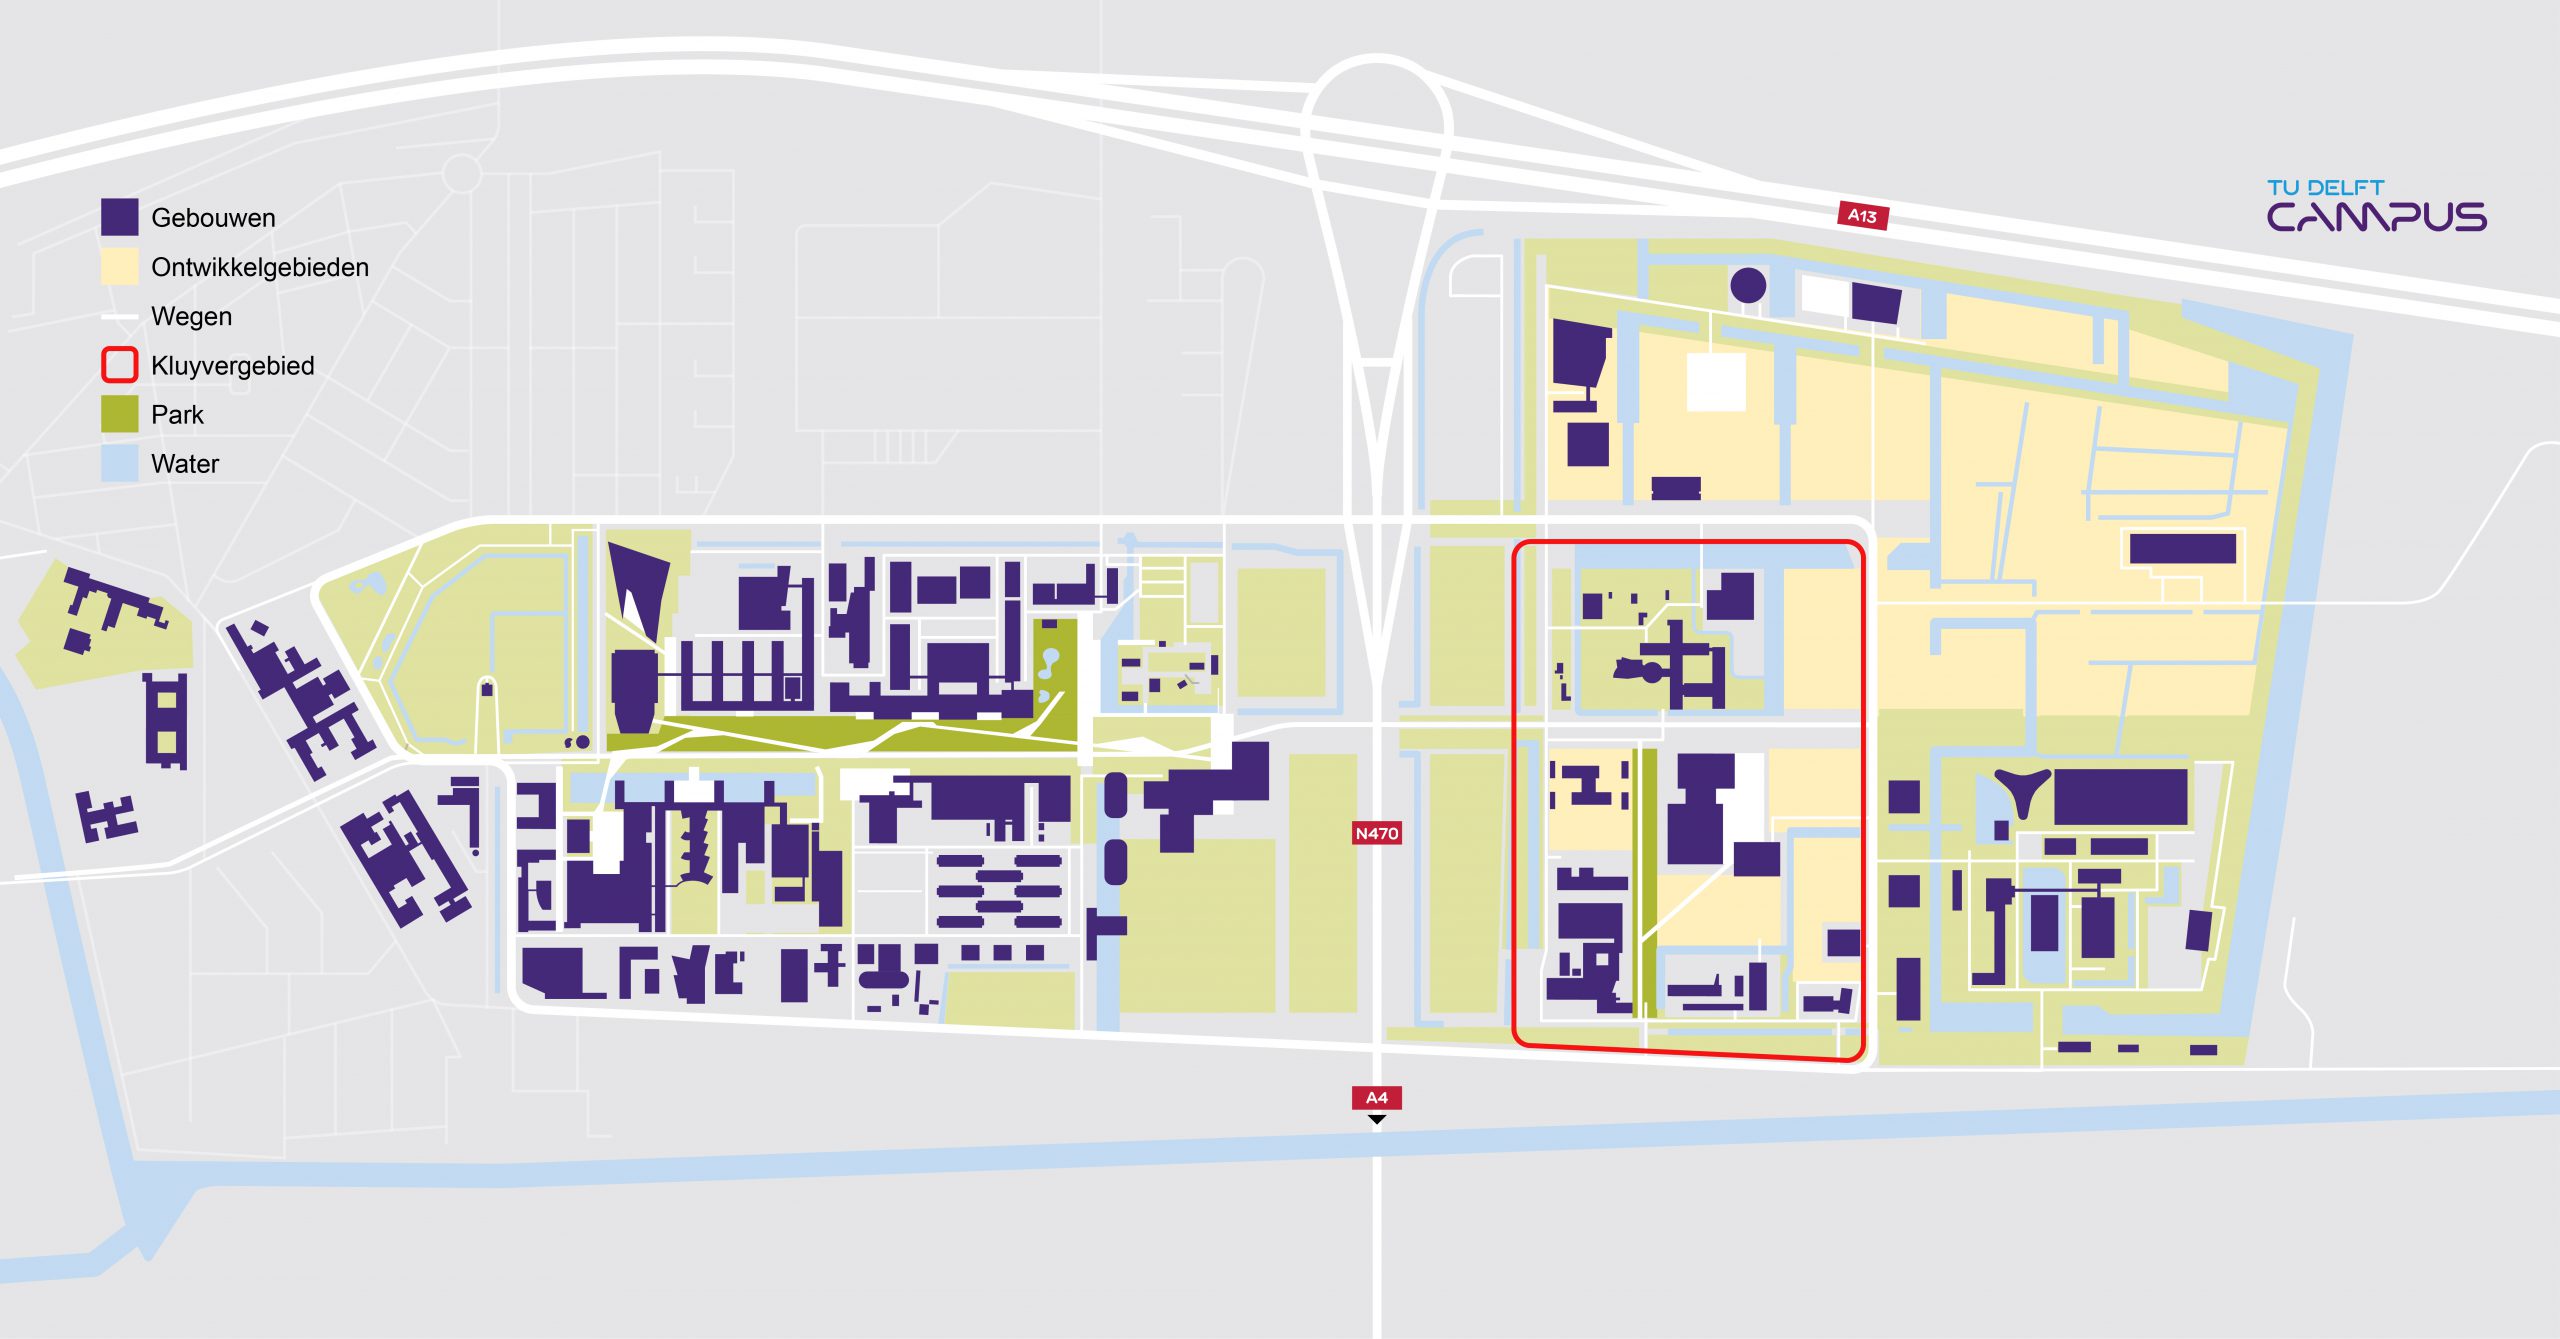 Kluyvergebied - TU Delft Campus - augustus 2021